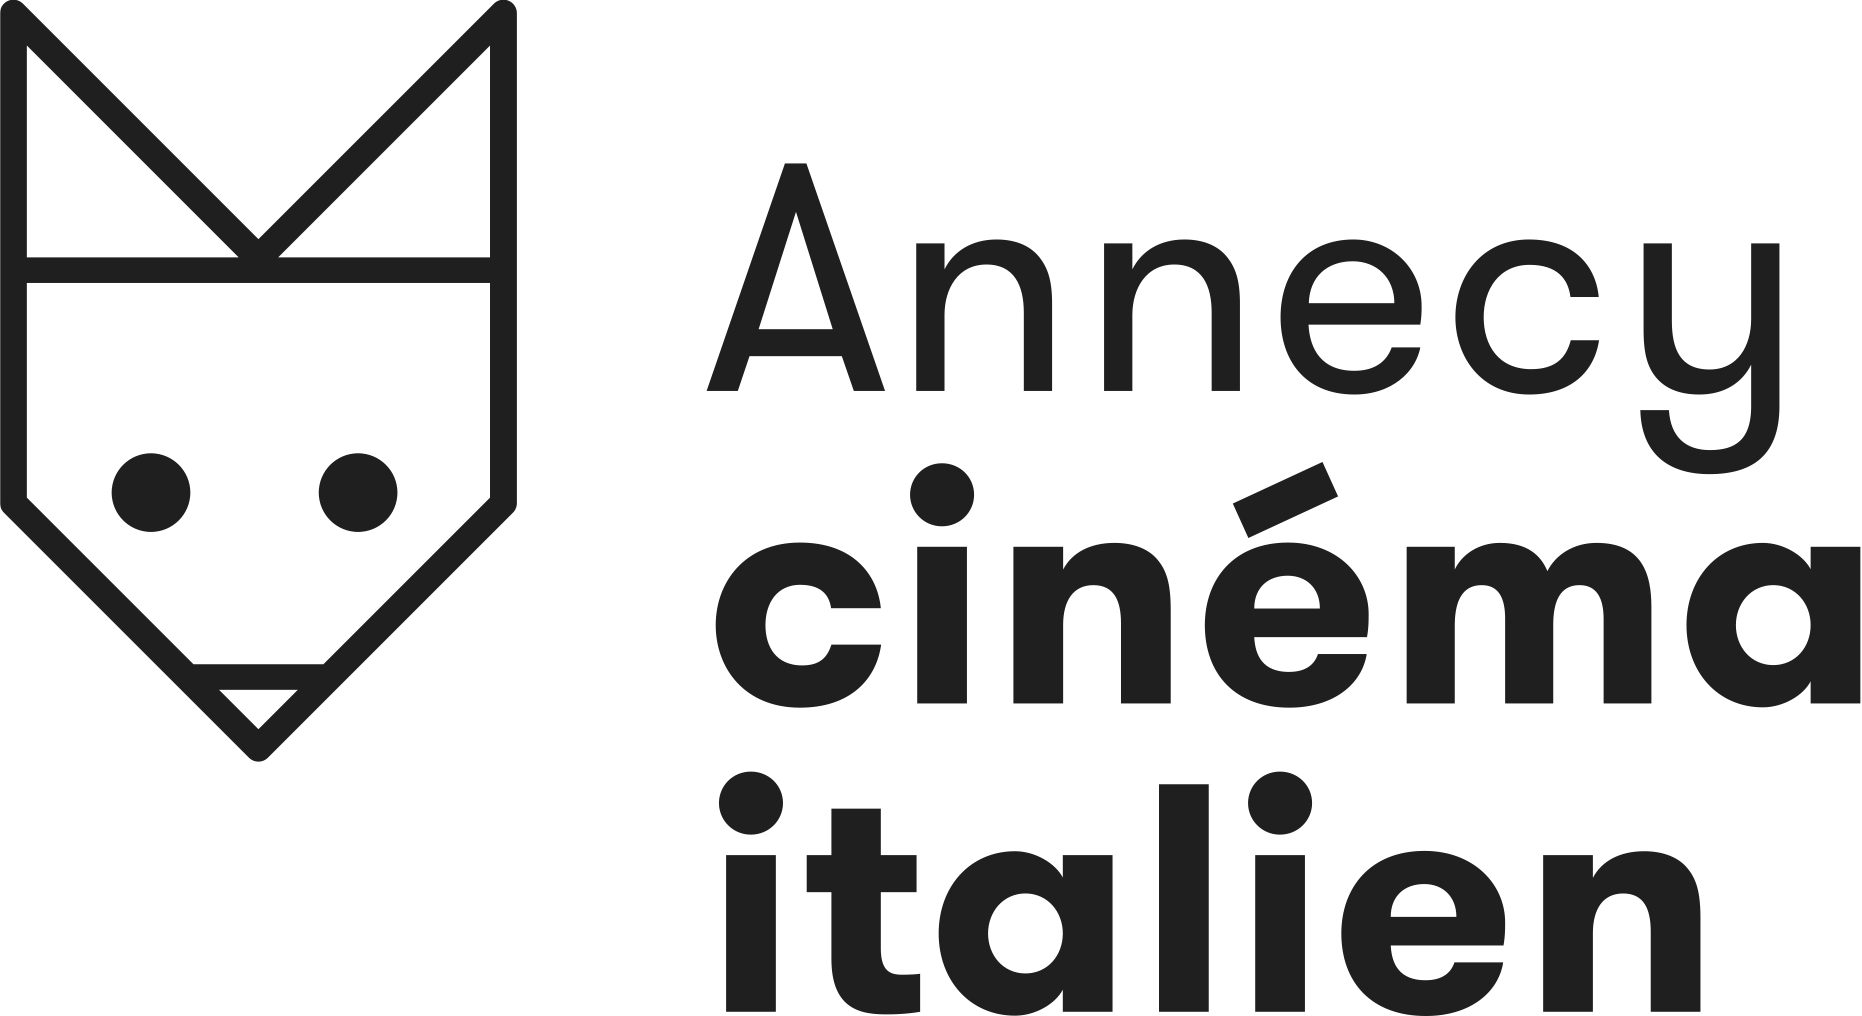 Annecy cinéma italien